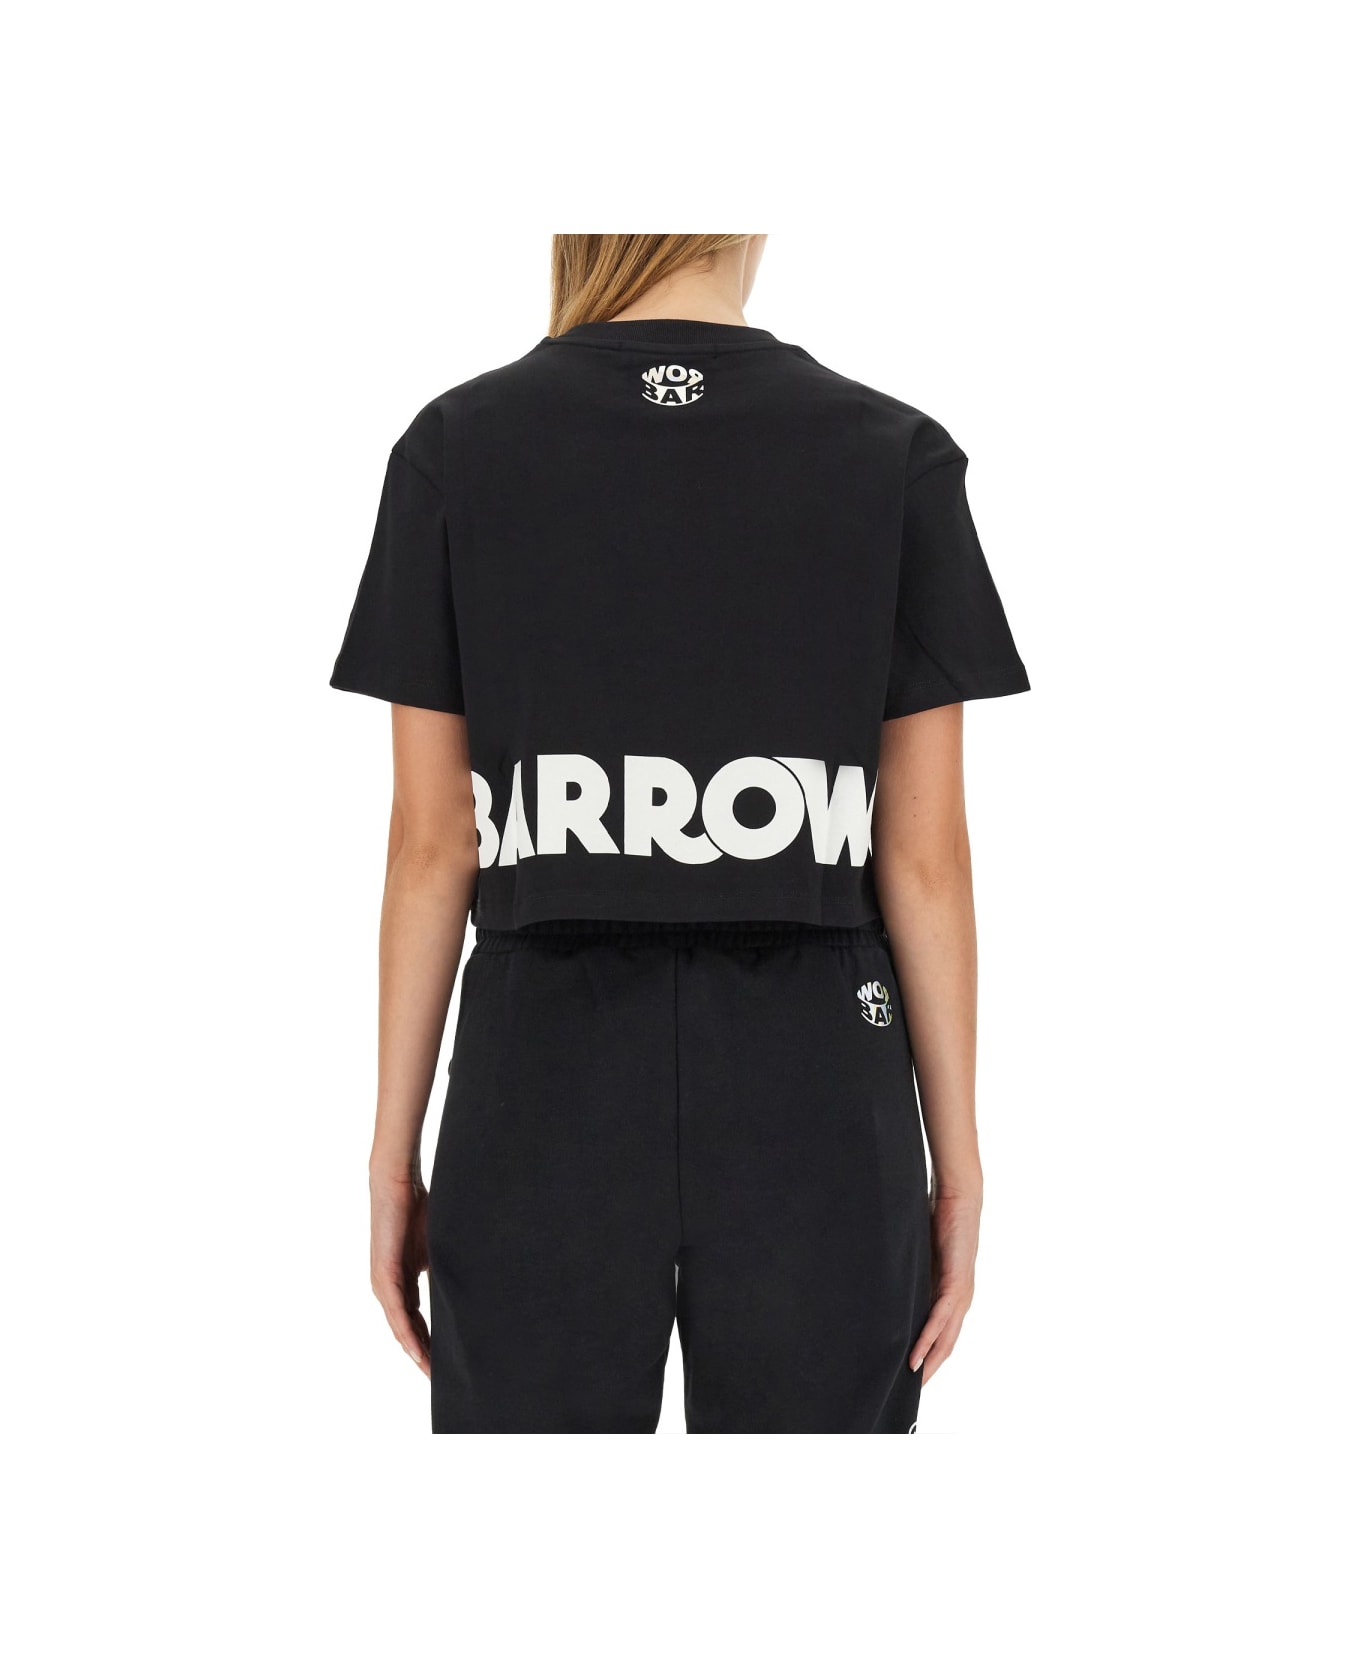 Barrow Cropped Fit T-shirt - BLACK